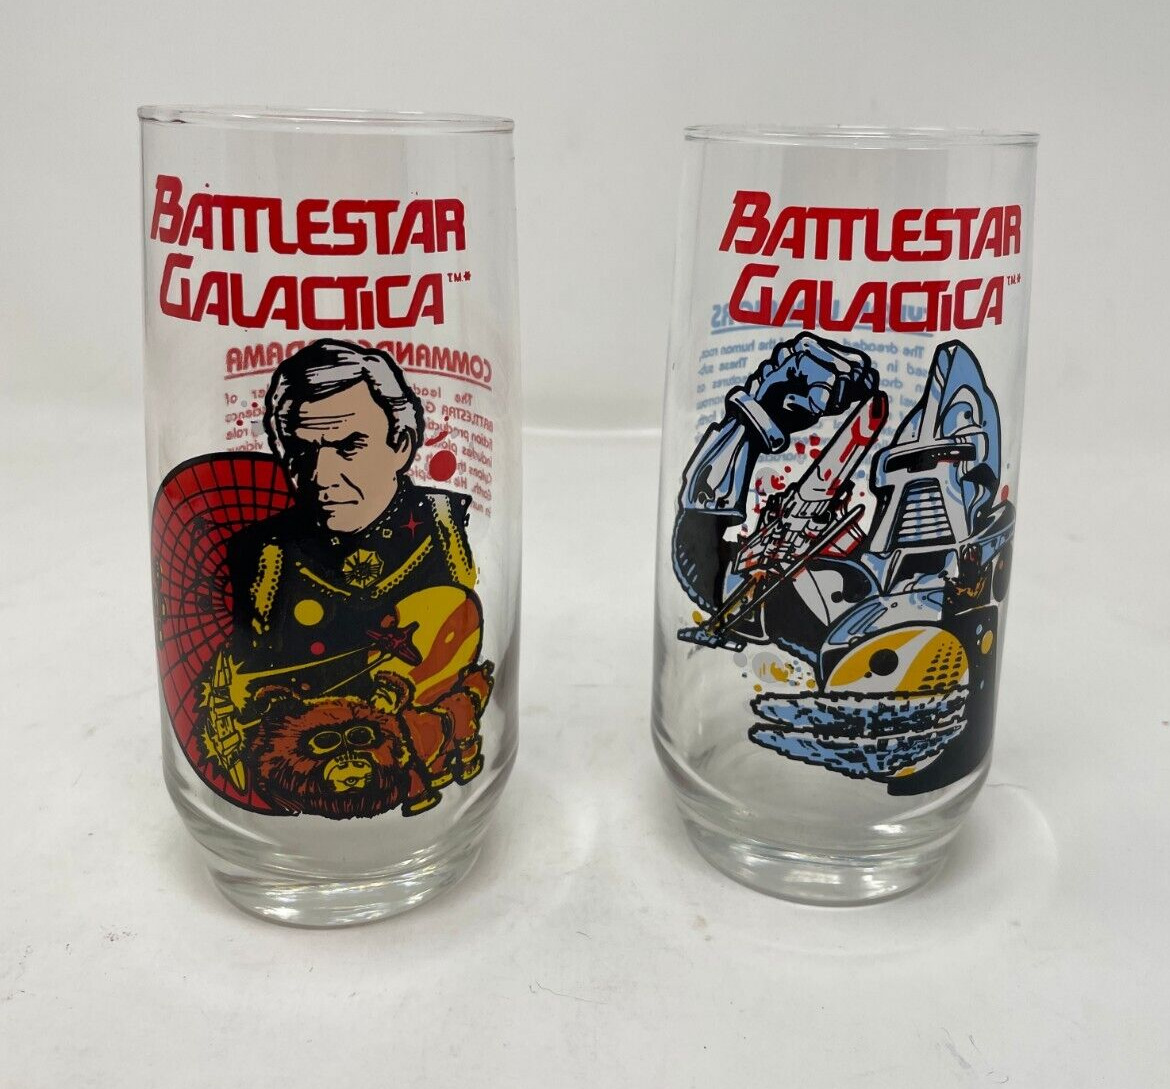 Vtg 1979 Battlestar Galactica Glass Tumblesr Universal City Studios Lot of 2 N13